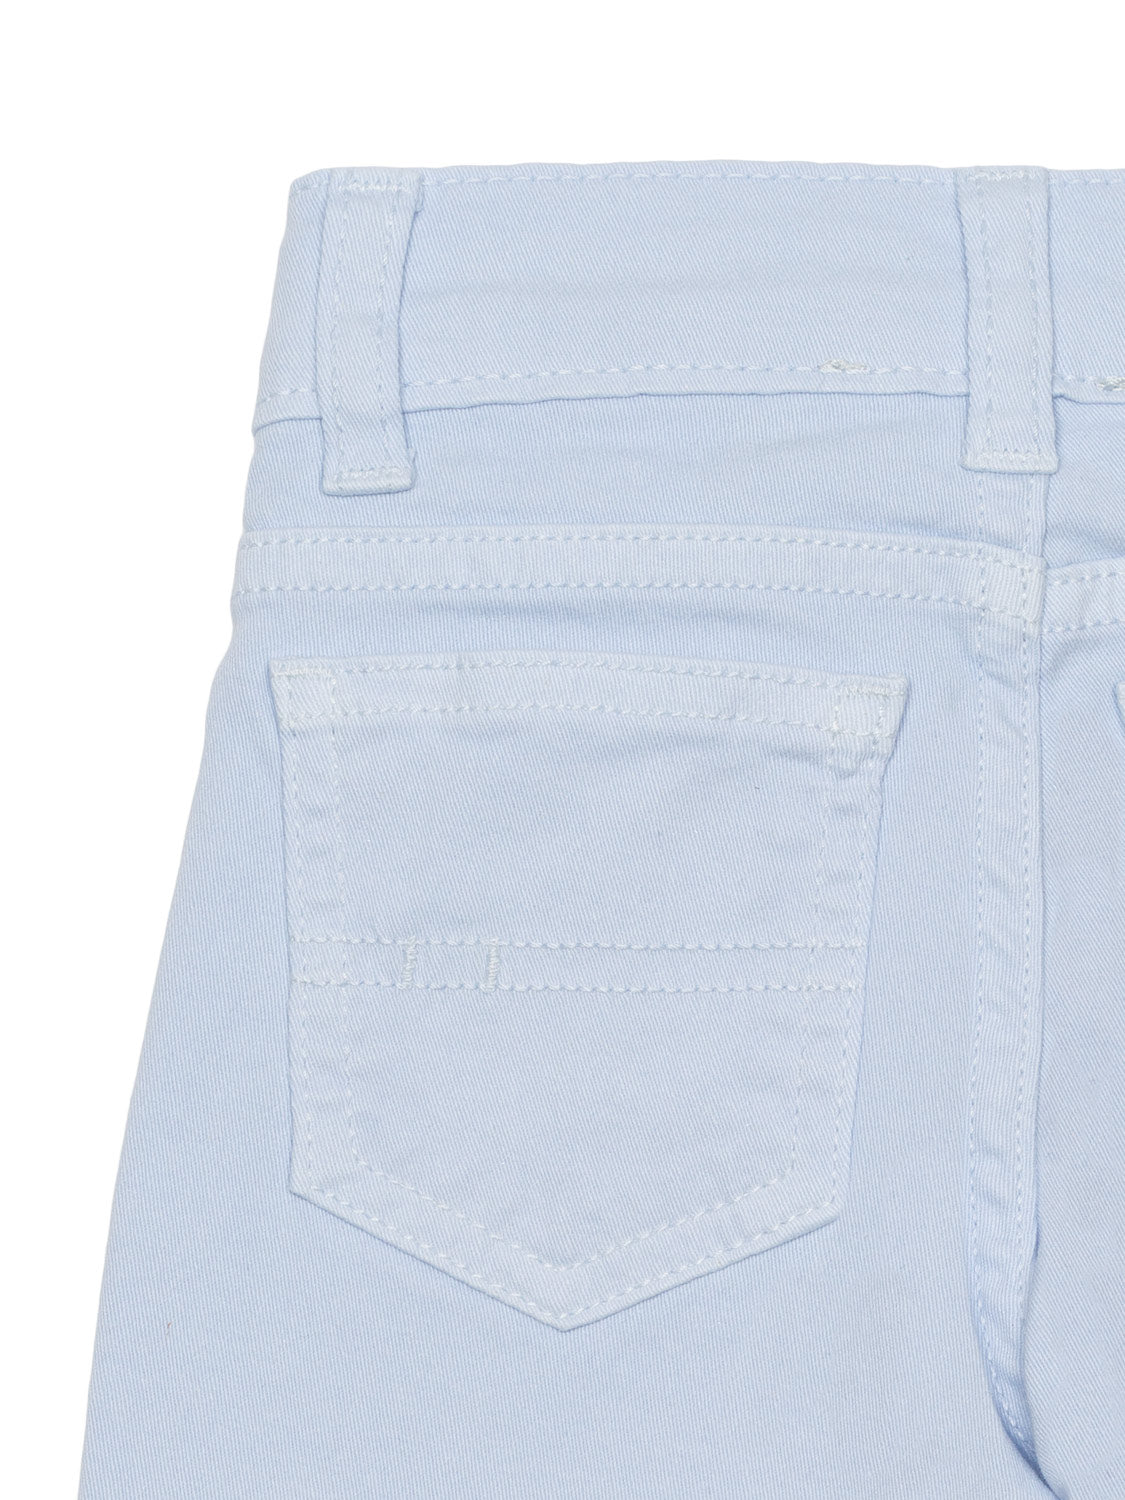 Five-Pocket Jeans mit Logo - Hellblau